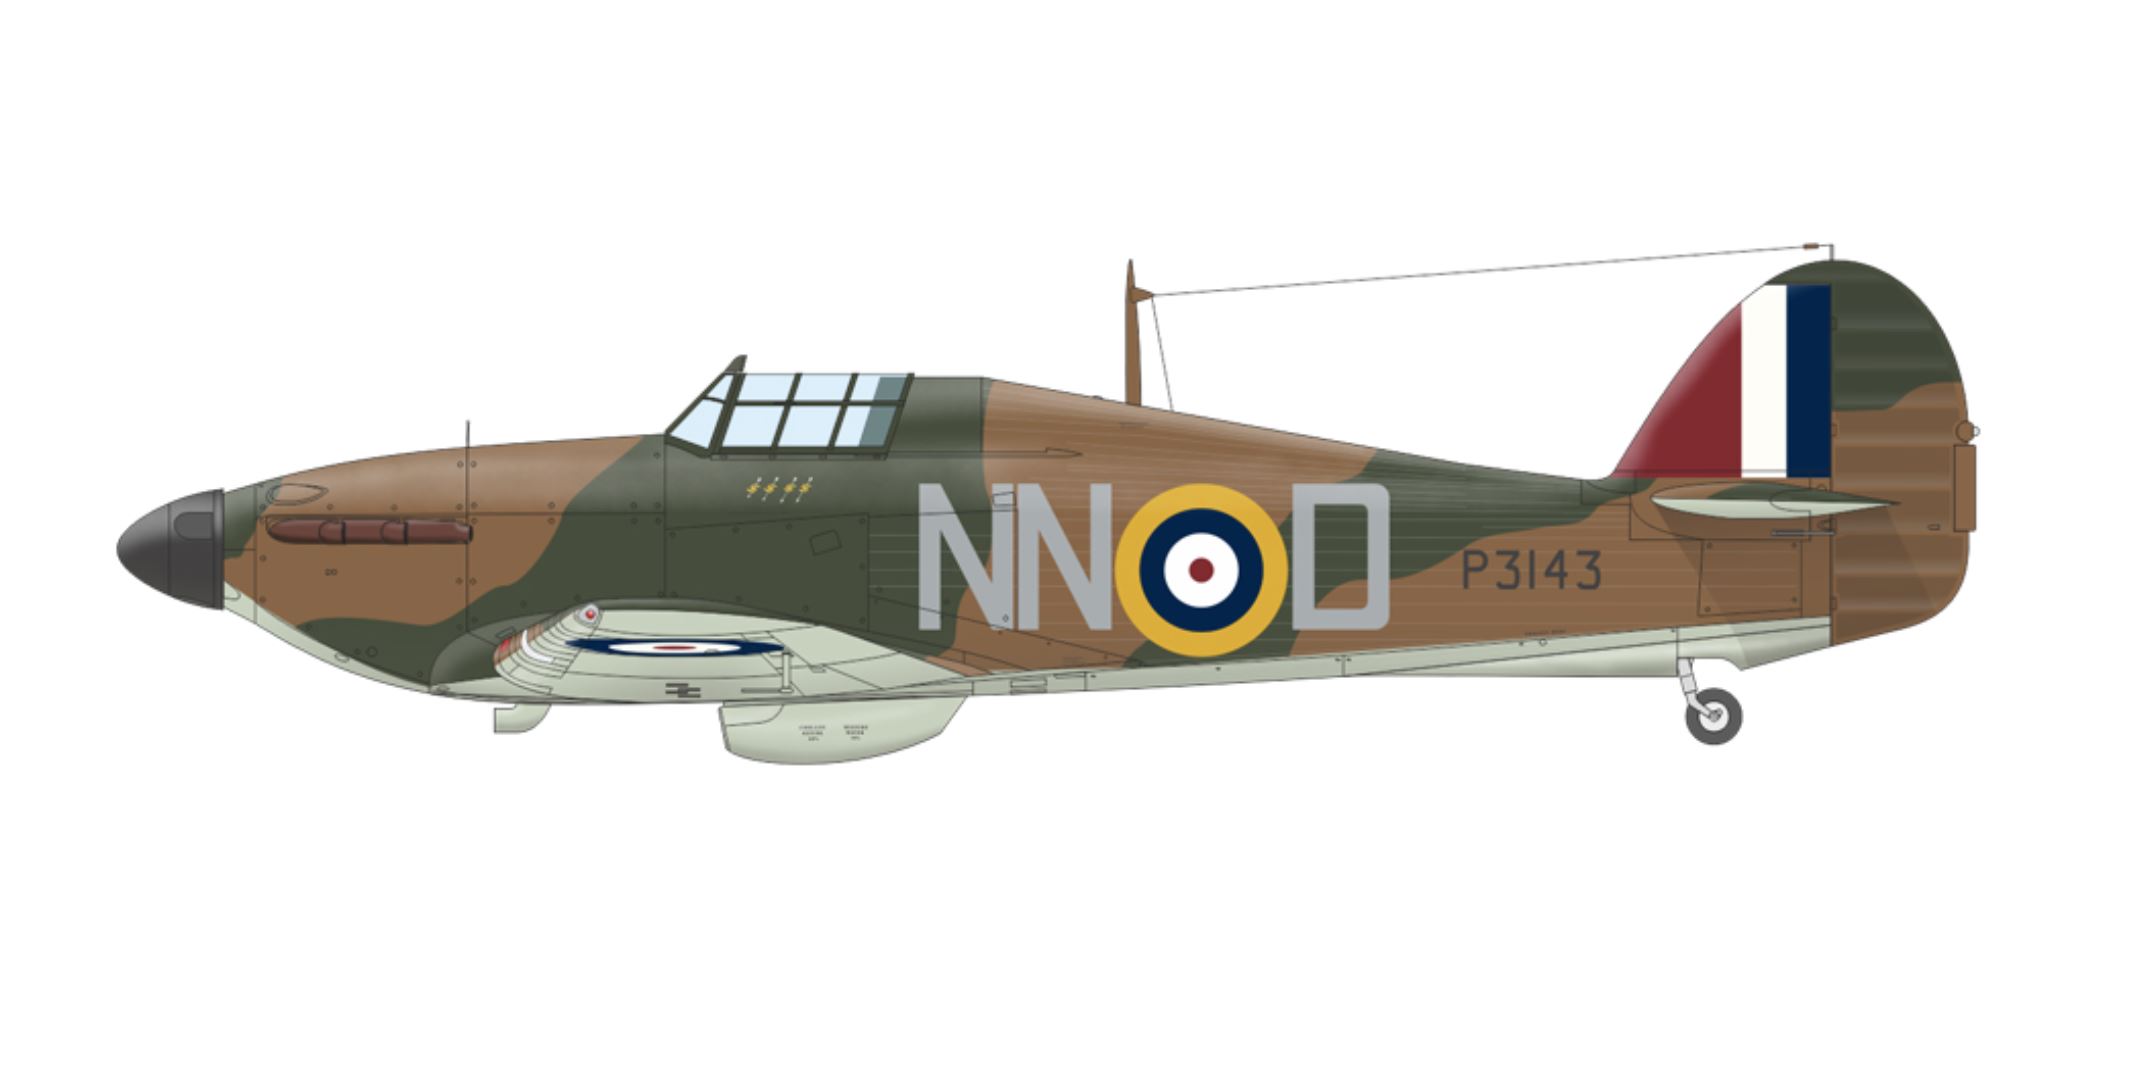 Hurricane I RAF 310Sqn (Czechoslovak) NND P3143 RAF Duxford Cambridgeshire Great Britain Sep 1940 0A